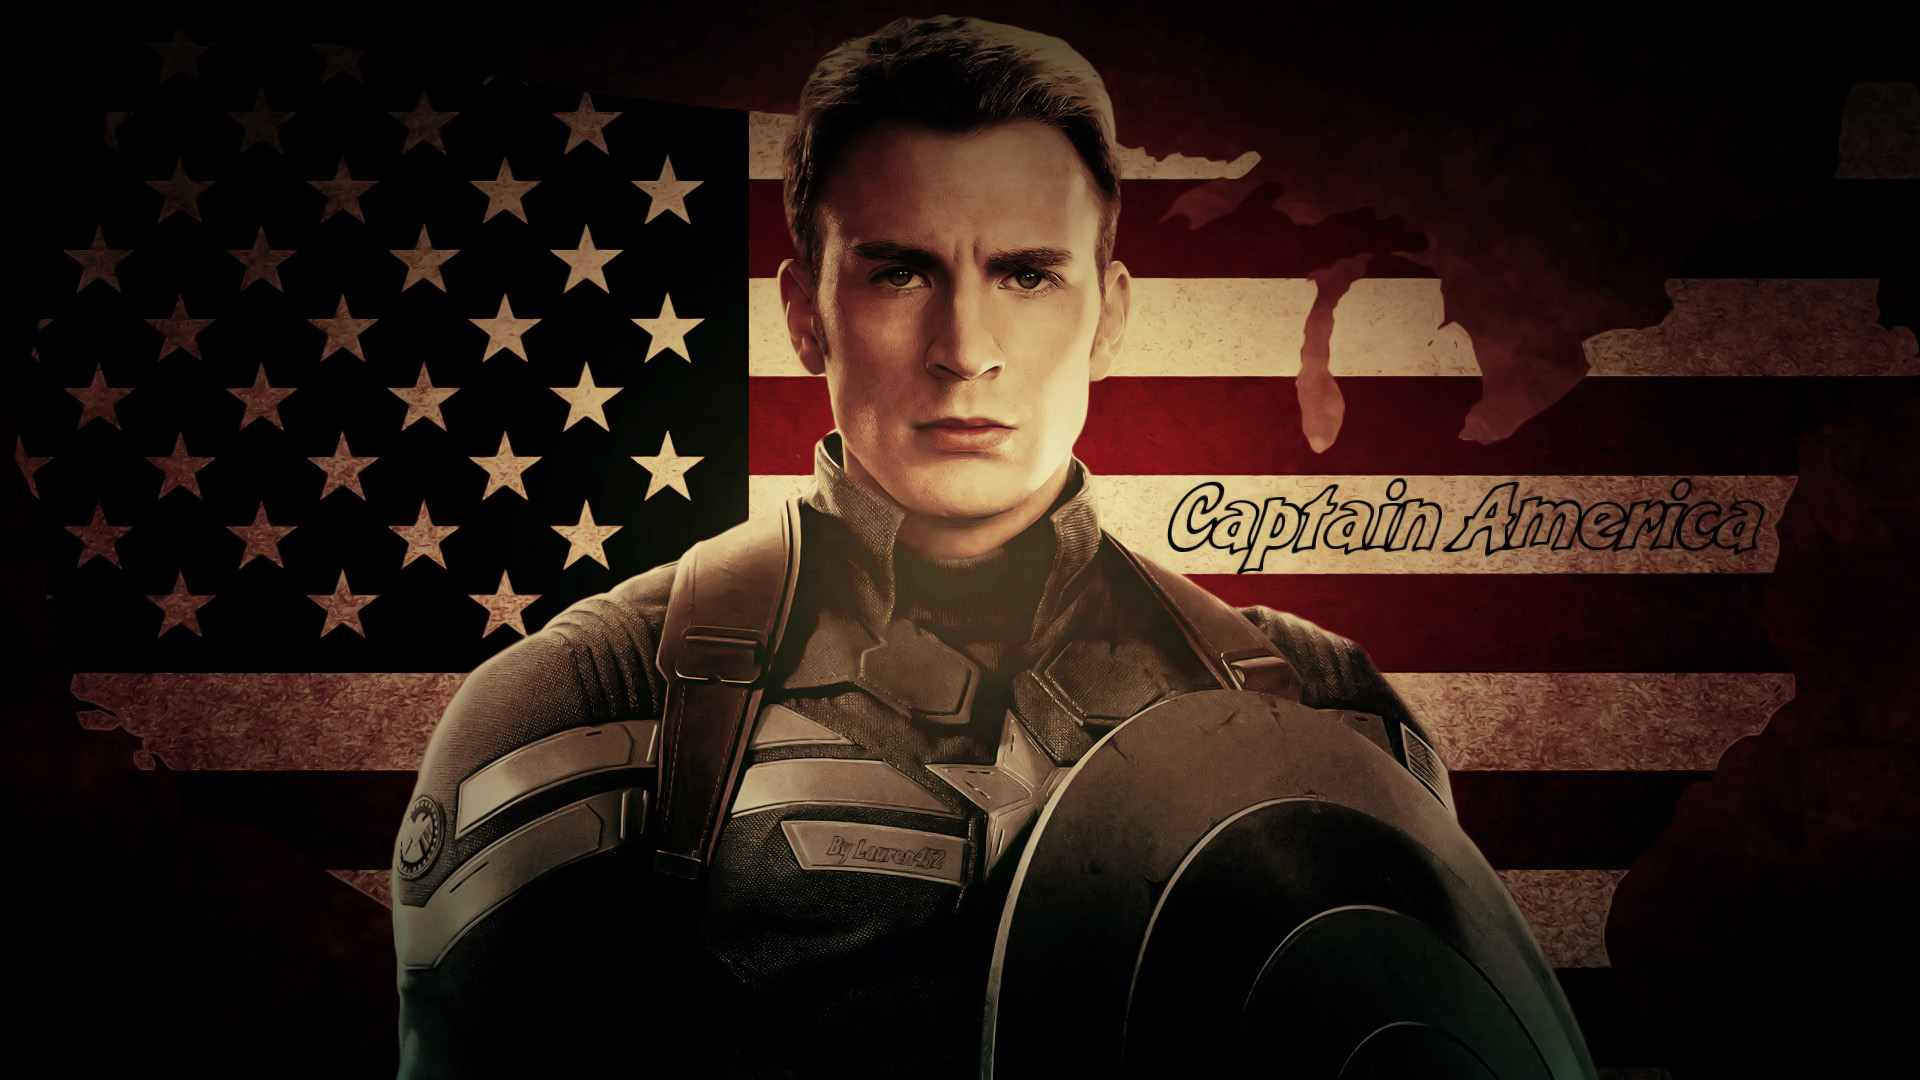 Chris Evans As Captain America Wallpapers